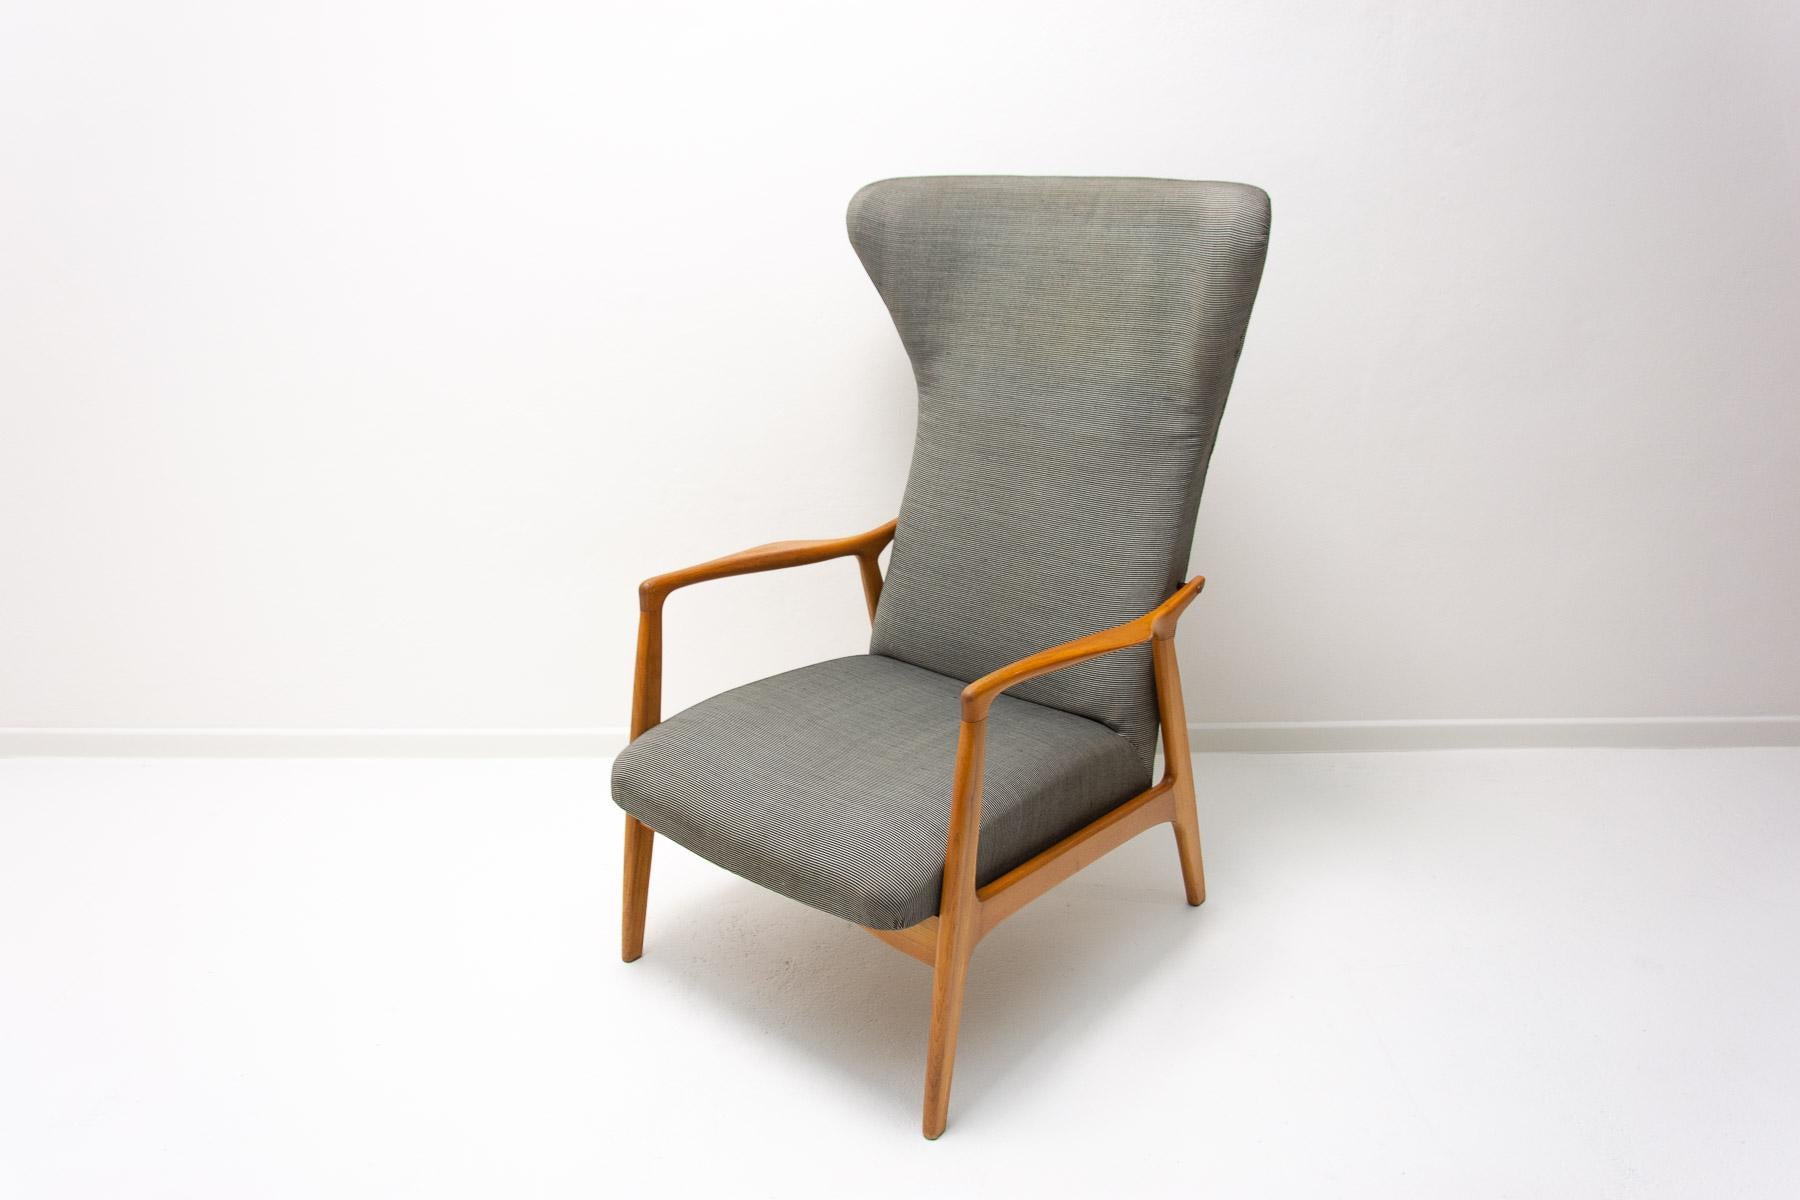 20th Century Scandinavian Style Wingback Chair with a Pouffe by Krásna Jizba, 1960s